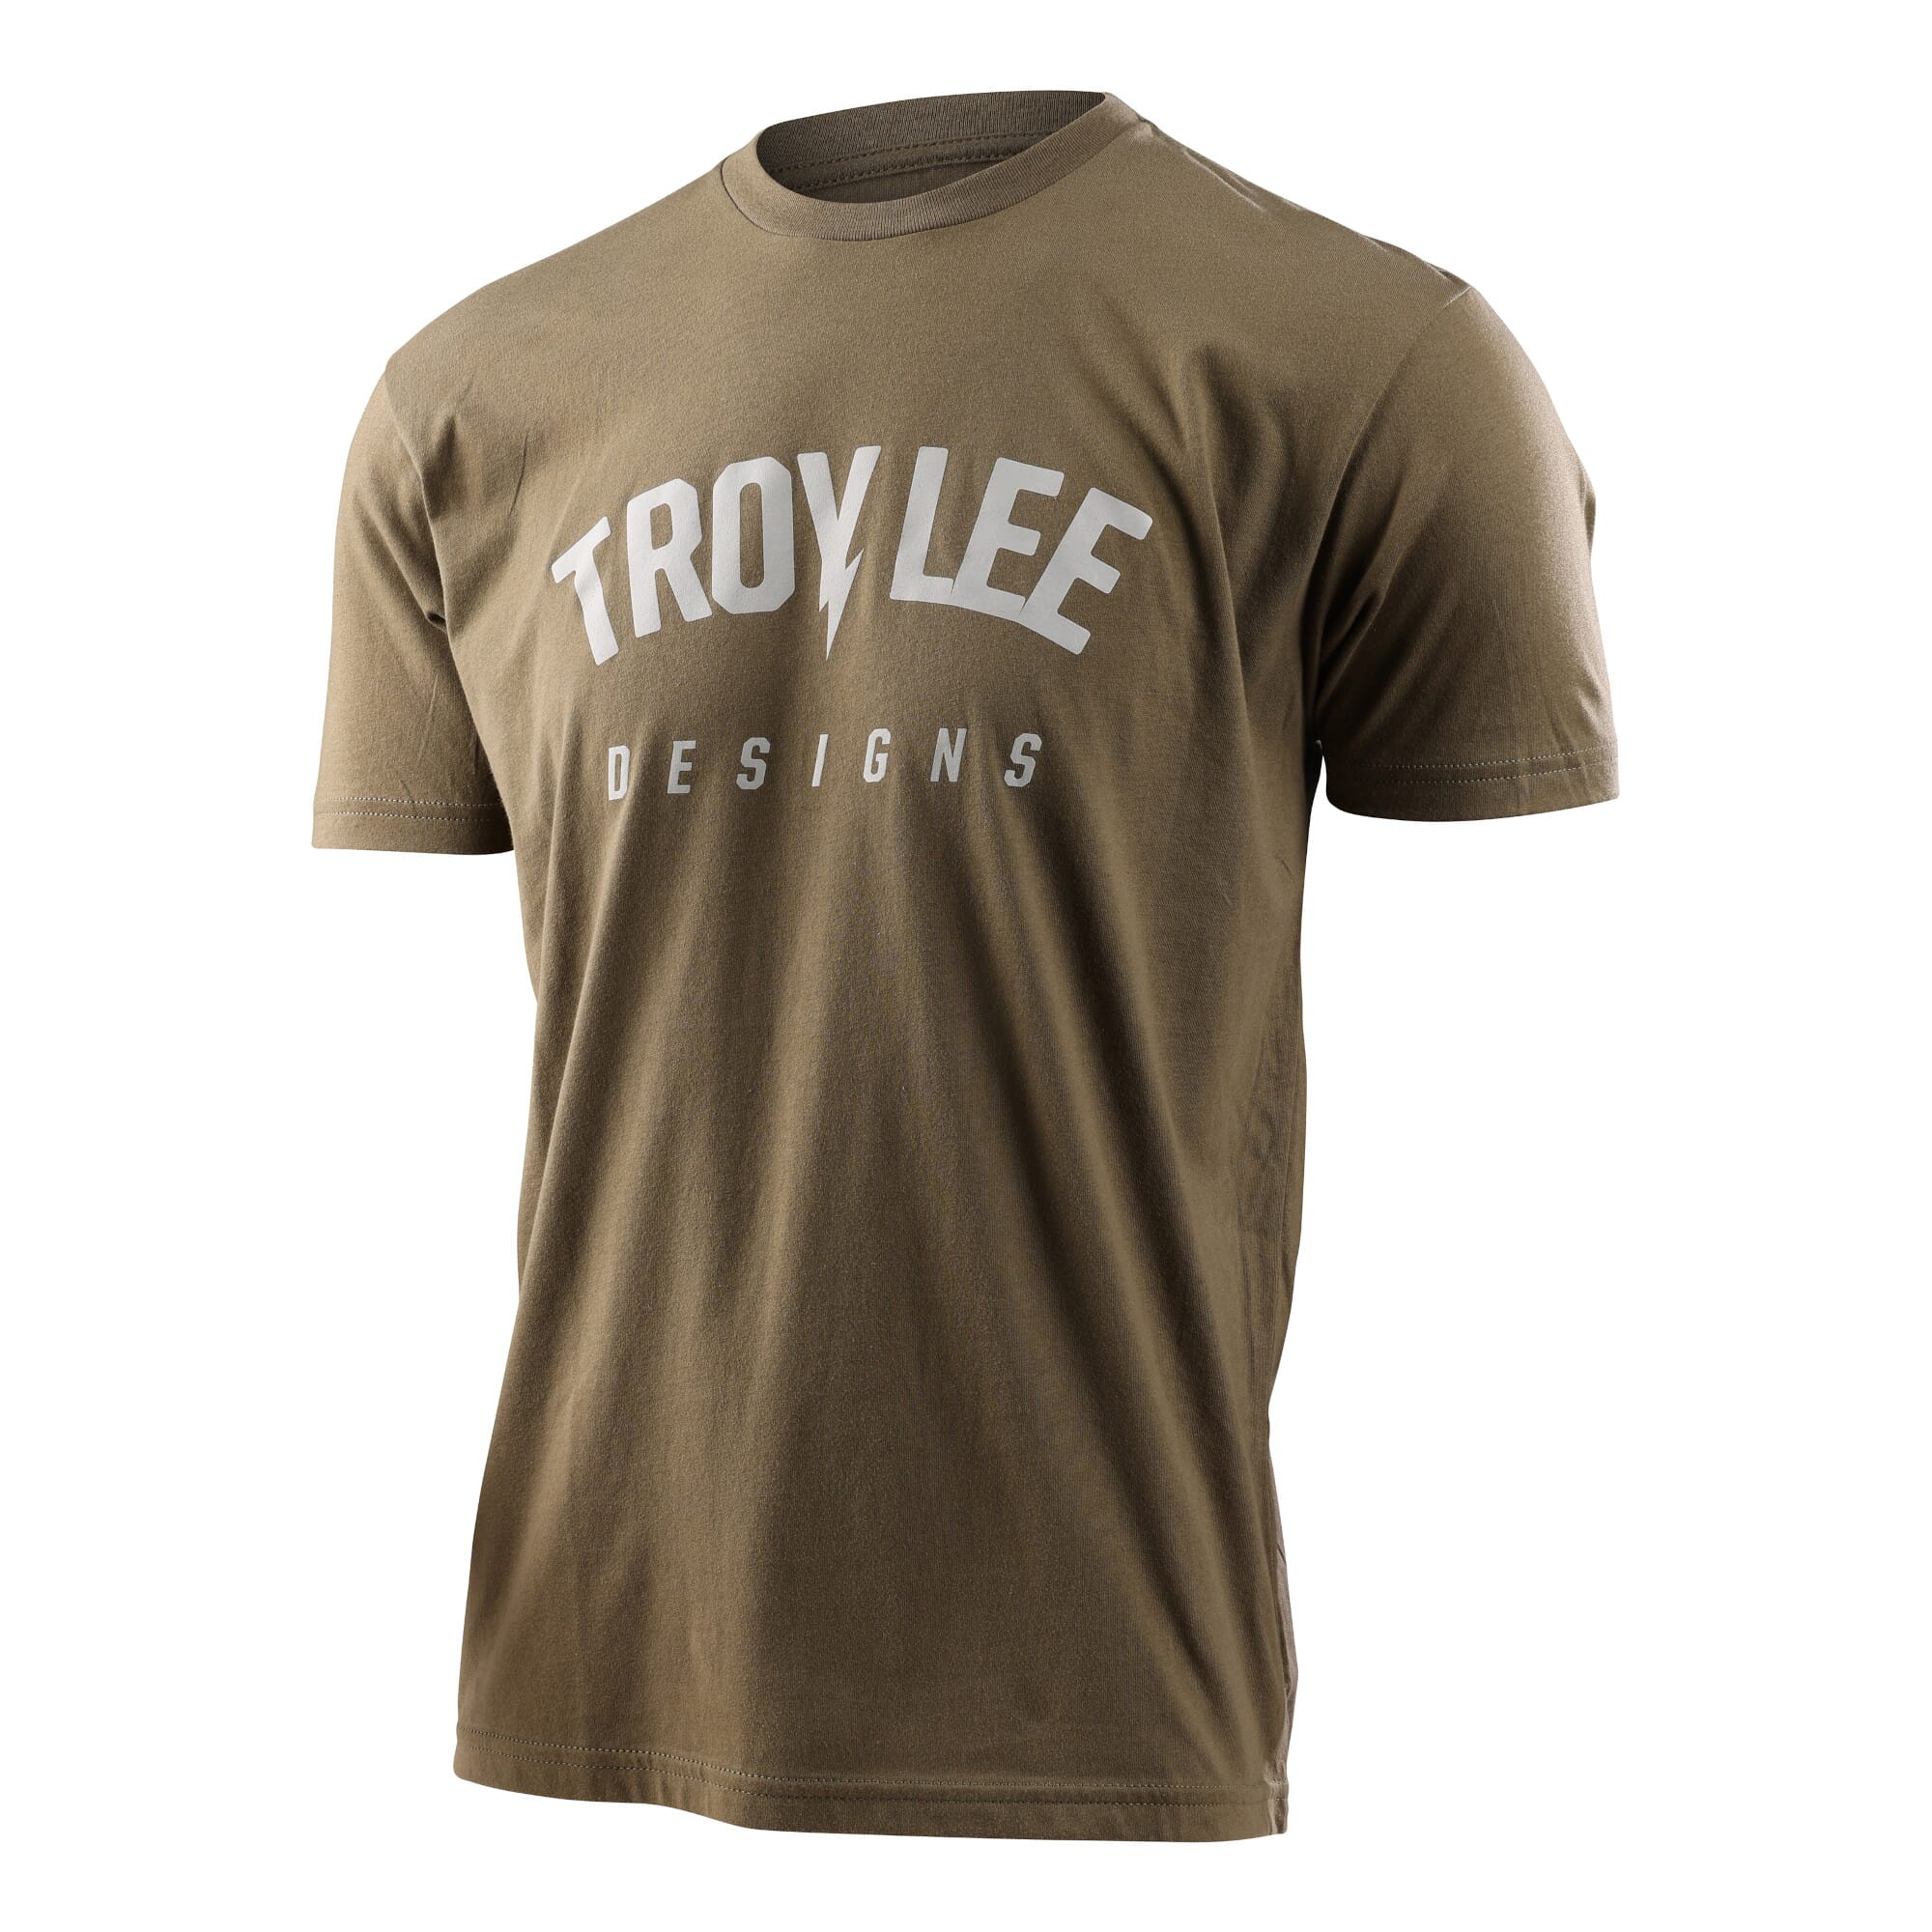 Troy Lee Designs Bolt T-Shirt – Saddleback Elite Performance Cycling